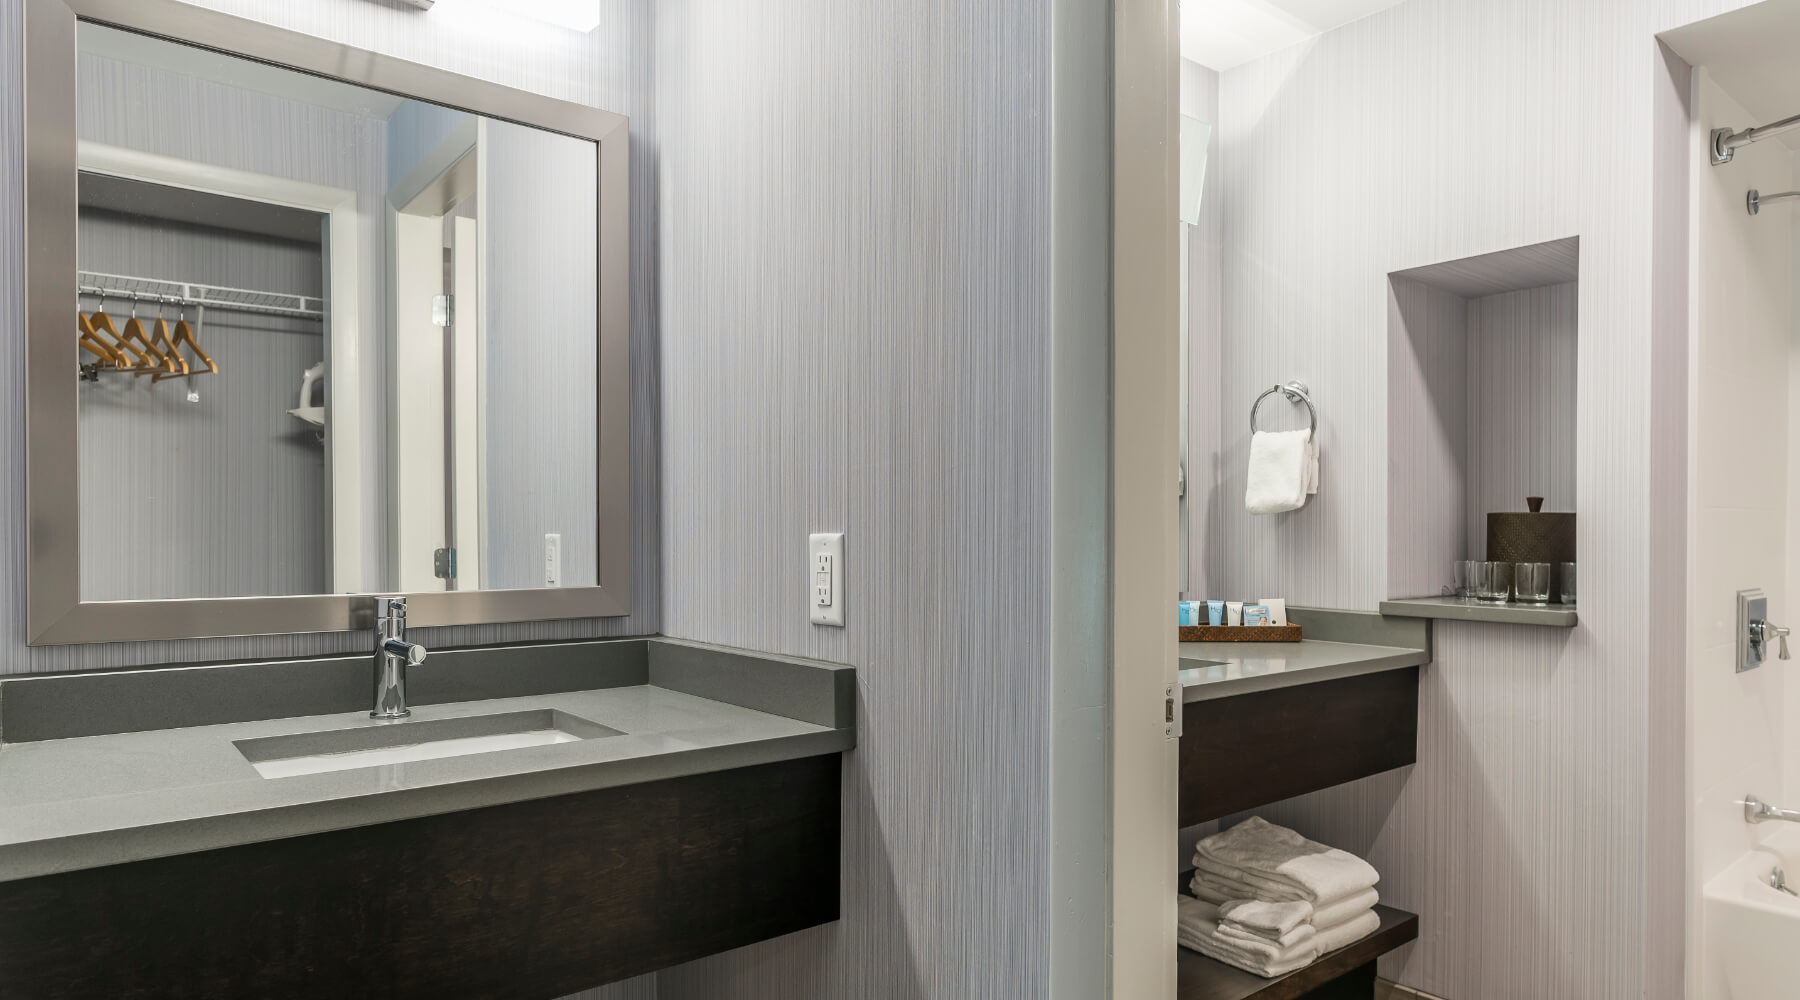 Hotel Guest Bathroom Sink and Mirror